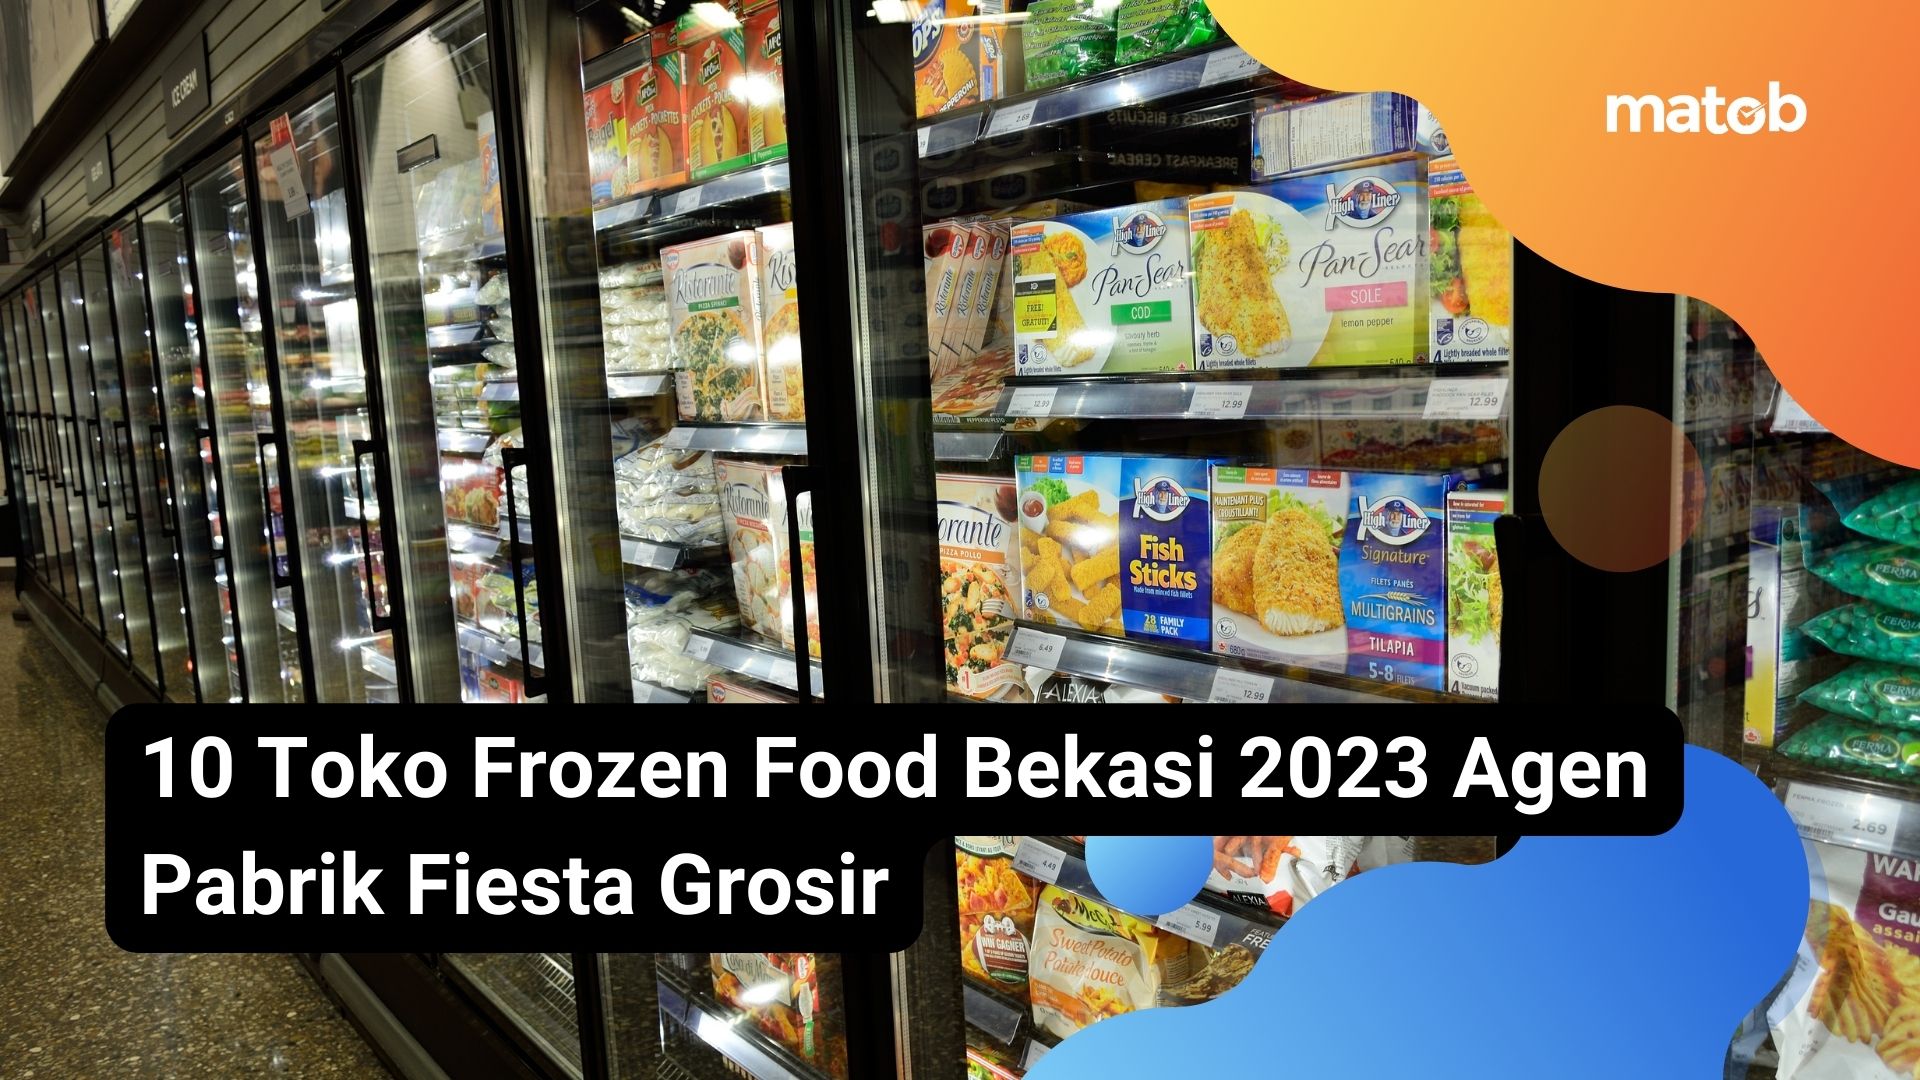 10 Toko Frozen Food Bekasi 2023 Agen Pabrik Fiesta Grosir